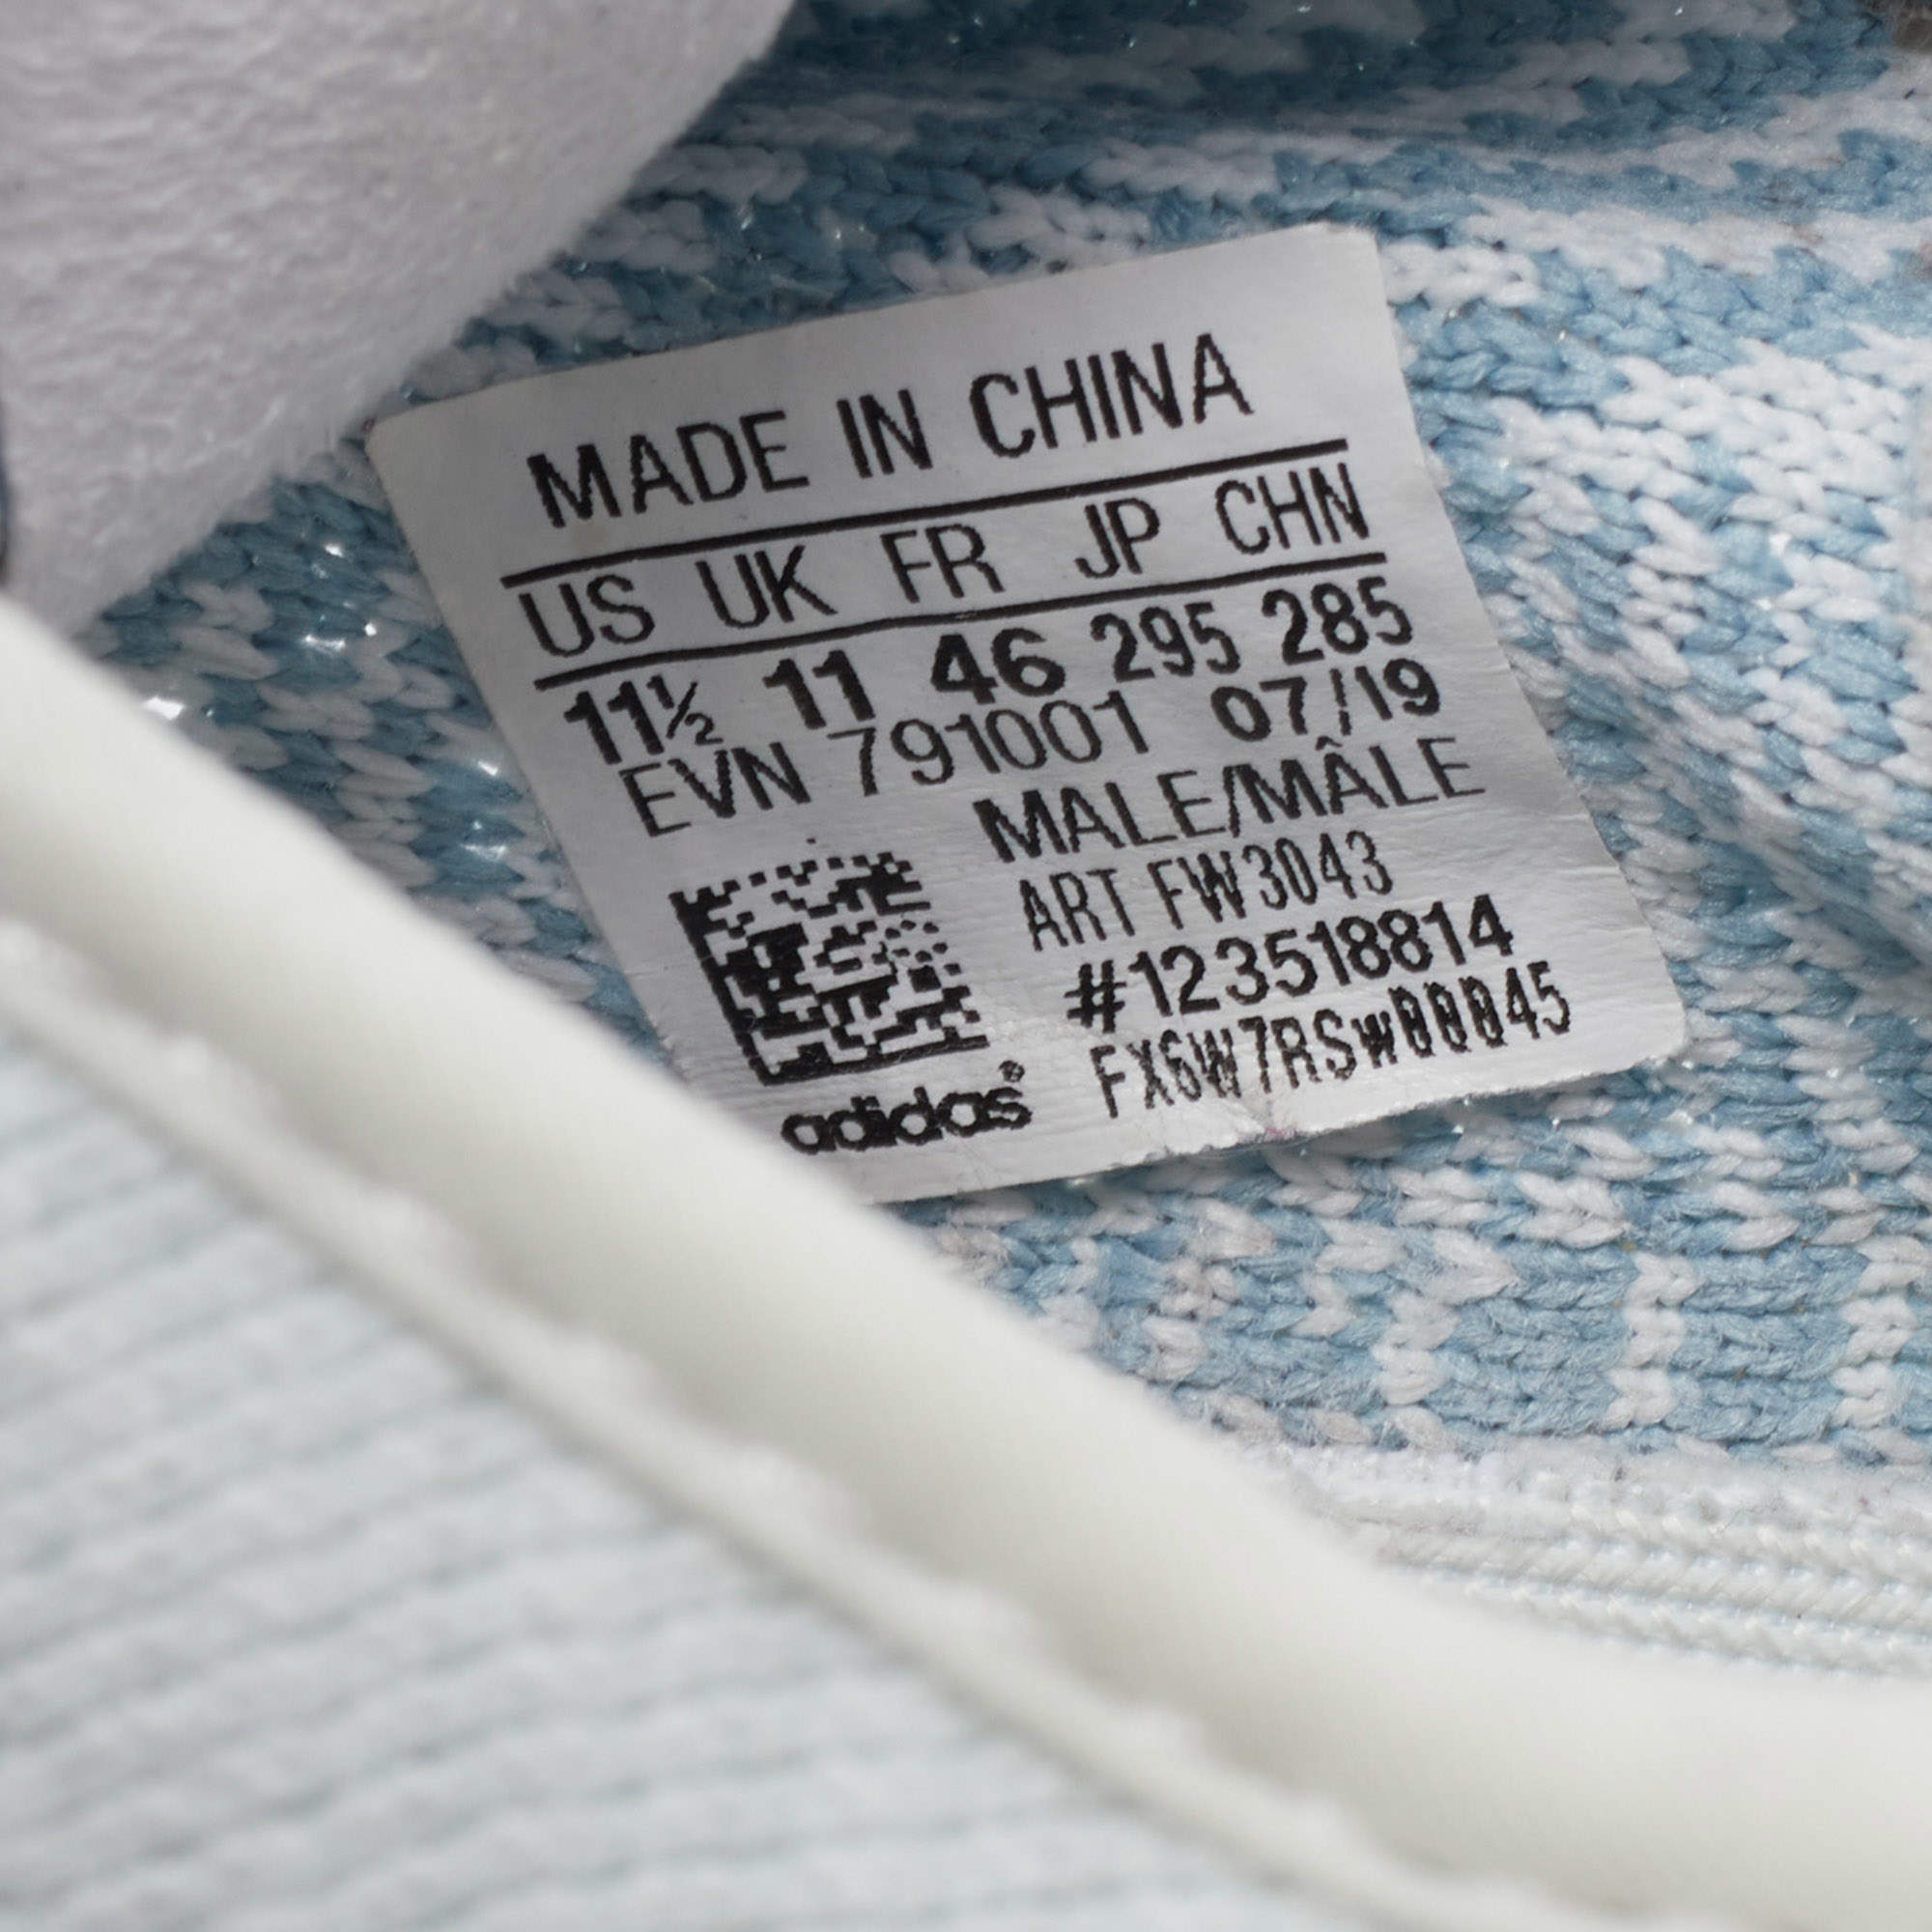 Yeezy x Adidas Off White Knit Fabric Boost 350 V2 Bone Sneakers Size 46  Yeezy x Adidas | The Luxury Closet